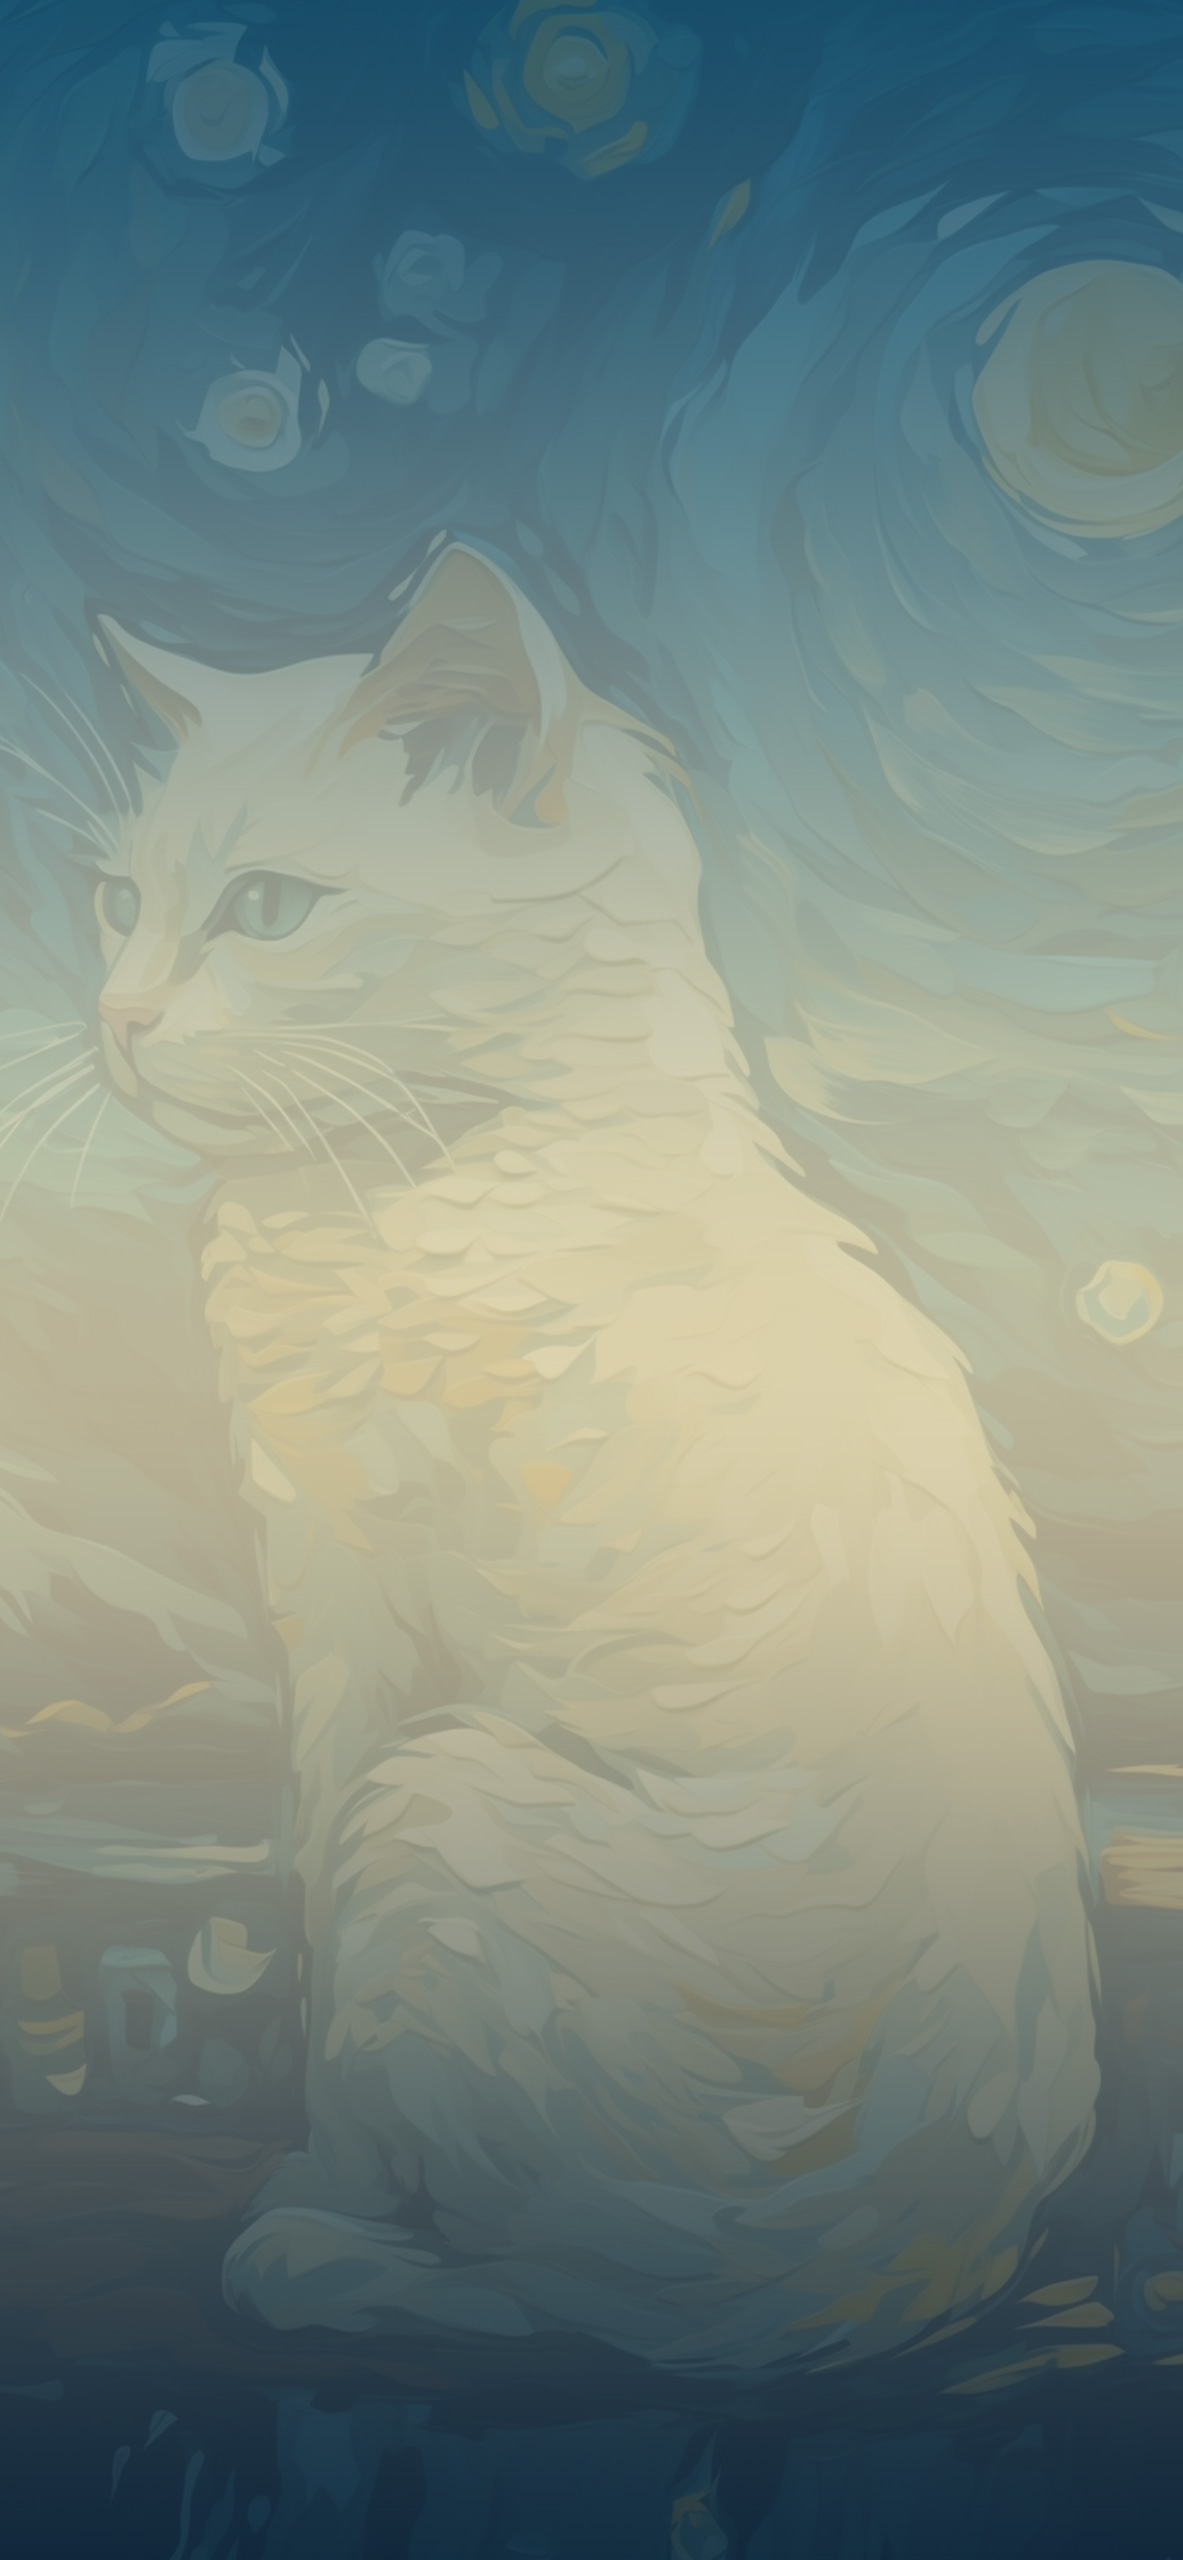 White Cat in Van Gogh Style Wallpaper Cool Cat Wallpaper for i